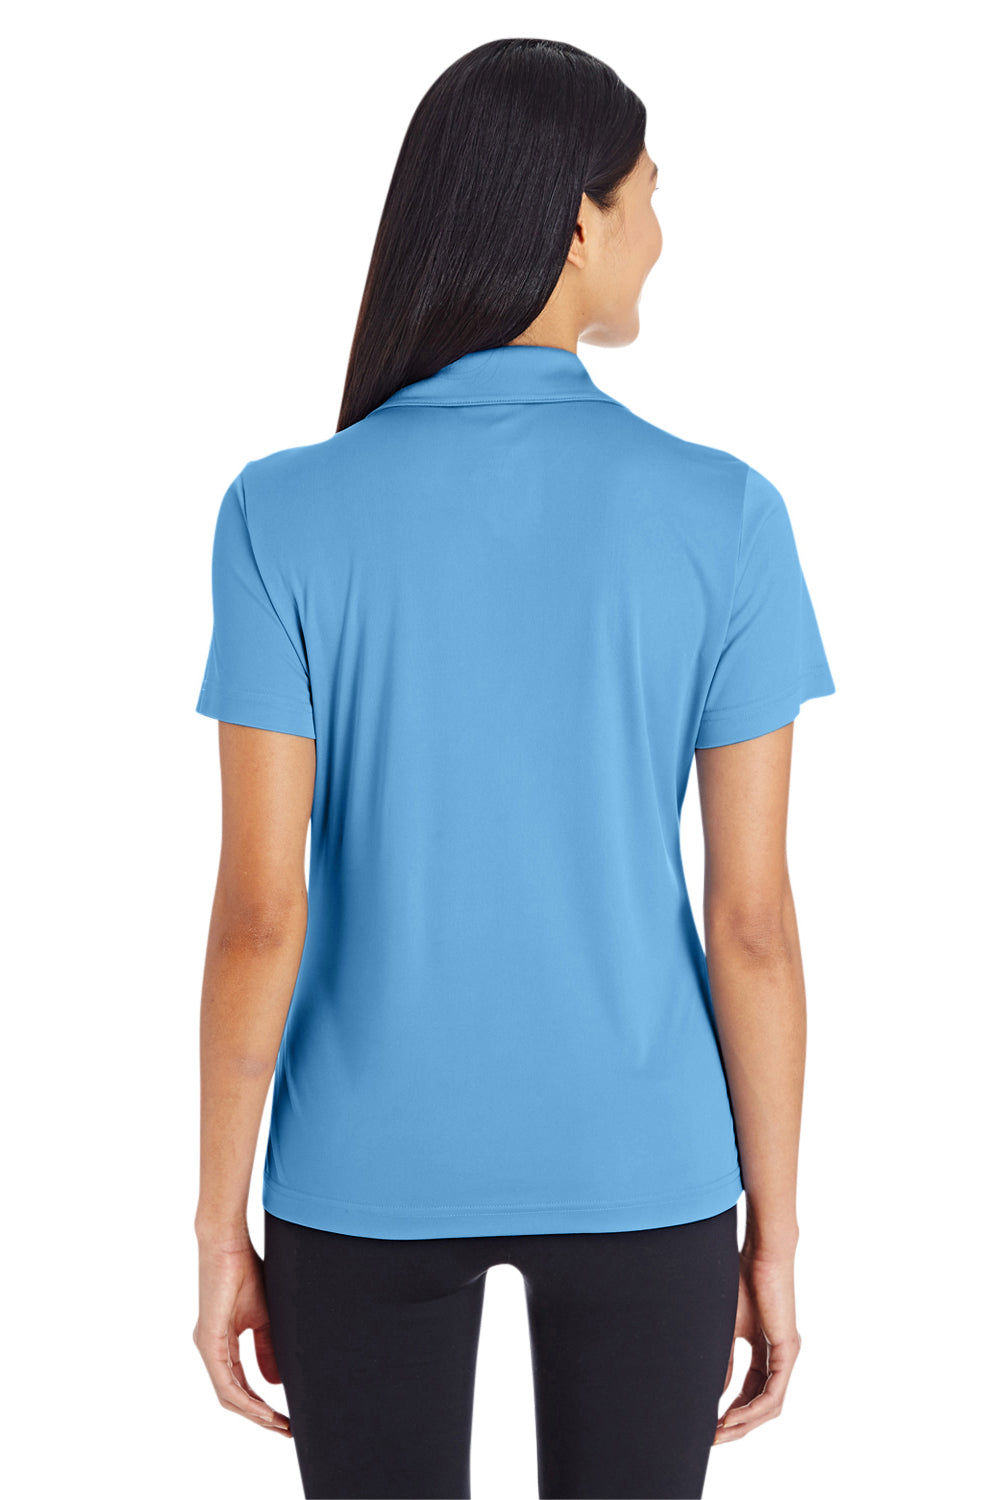 Team 365 TT51W Womens Zone Performance Moisture Wicking Short Sleeve Polo Shirt Light Blue Back